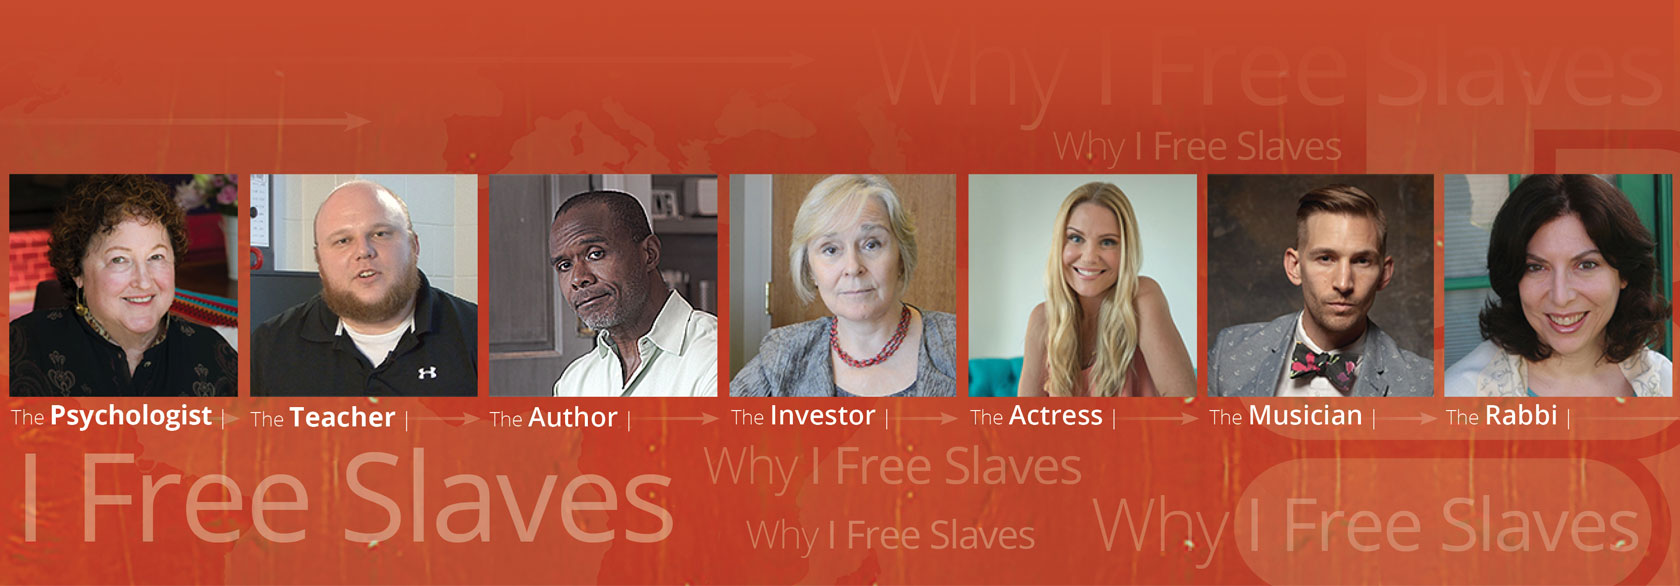 Why I Free Slaves – Photographer Lisa Kristine